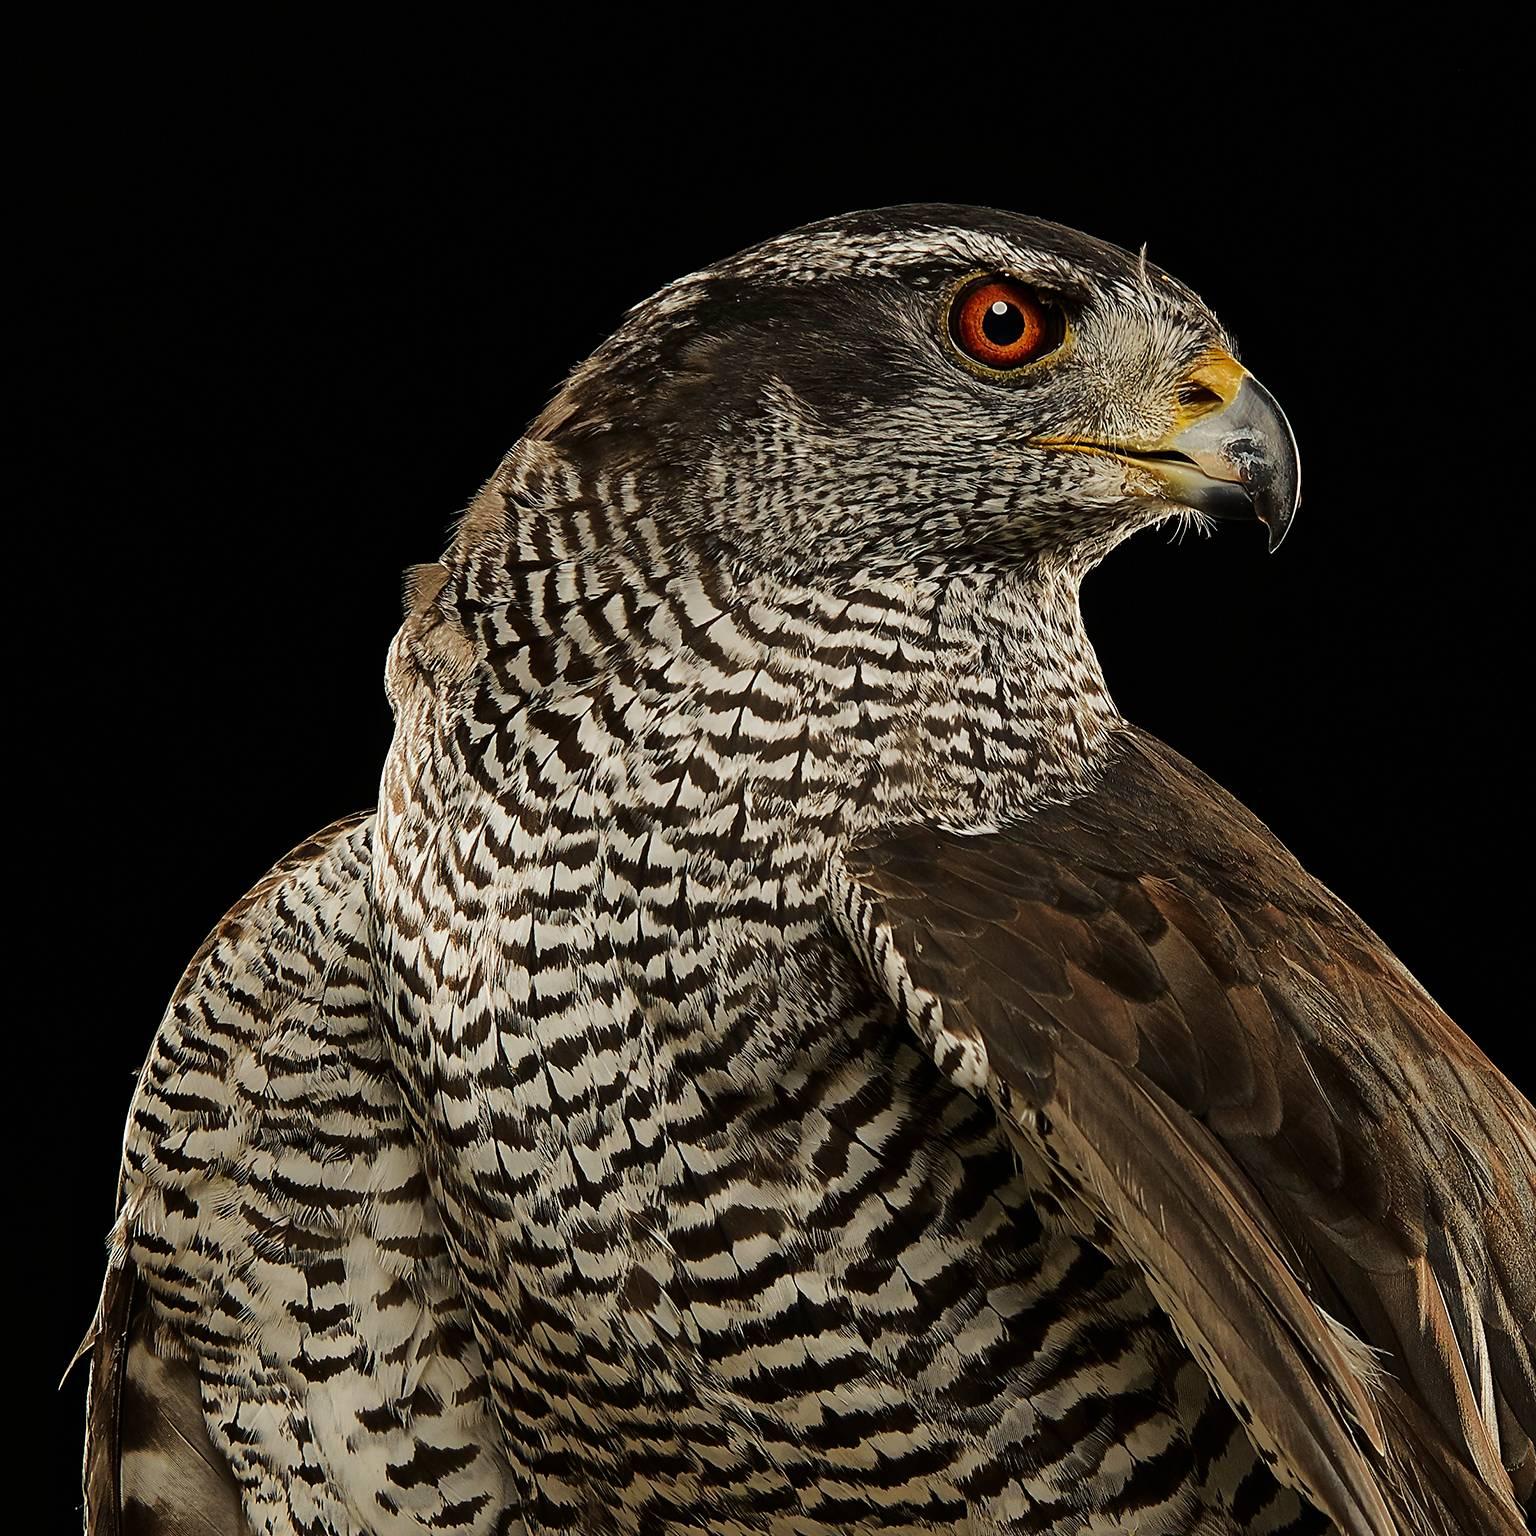 Birds of Prey Northern Goshawk No. 1 - Photograph by Chris Gordaneer